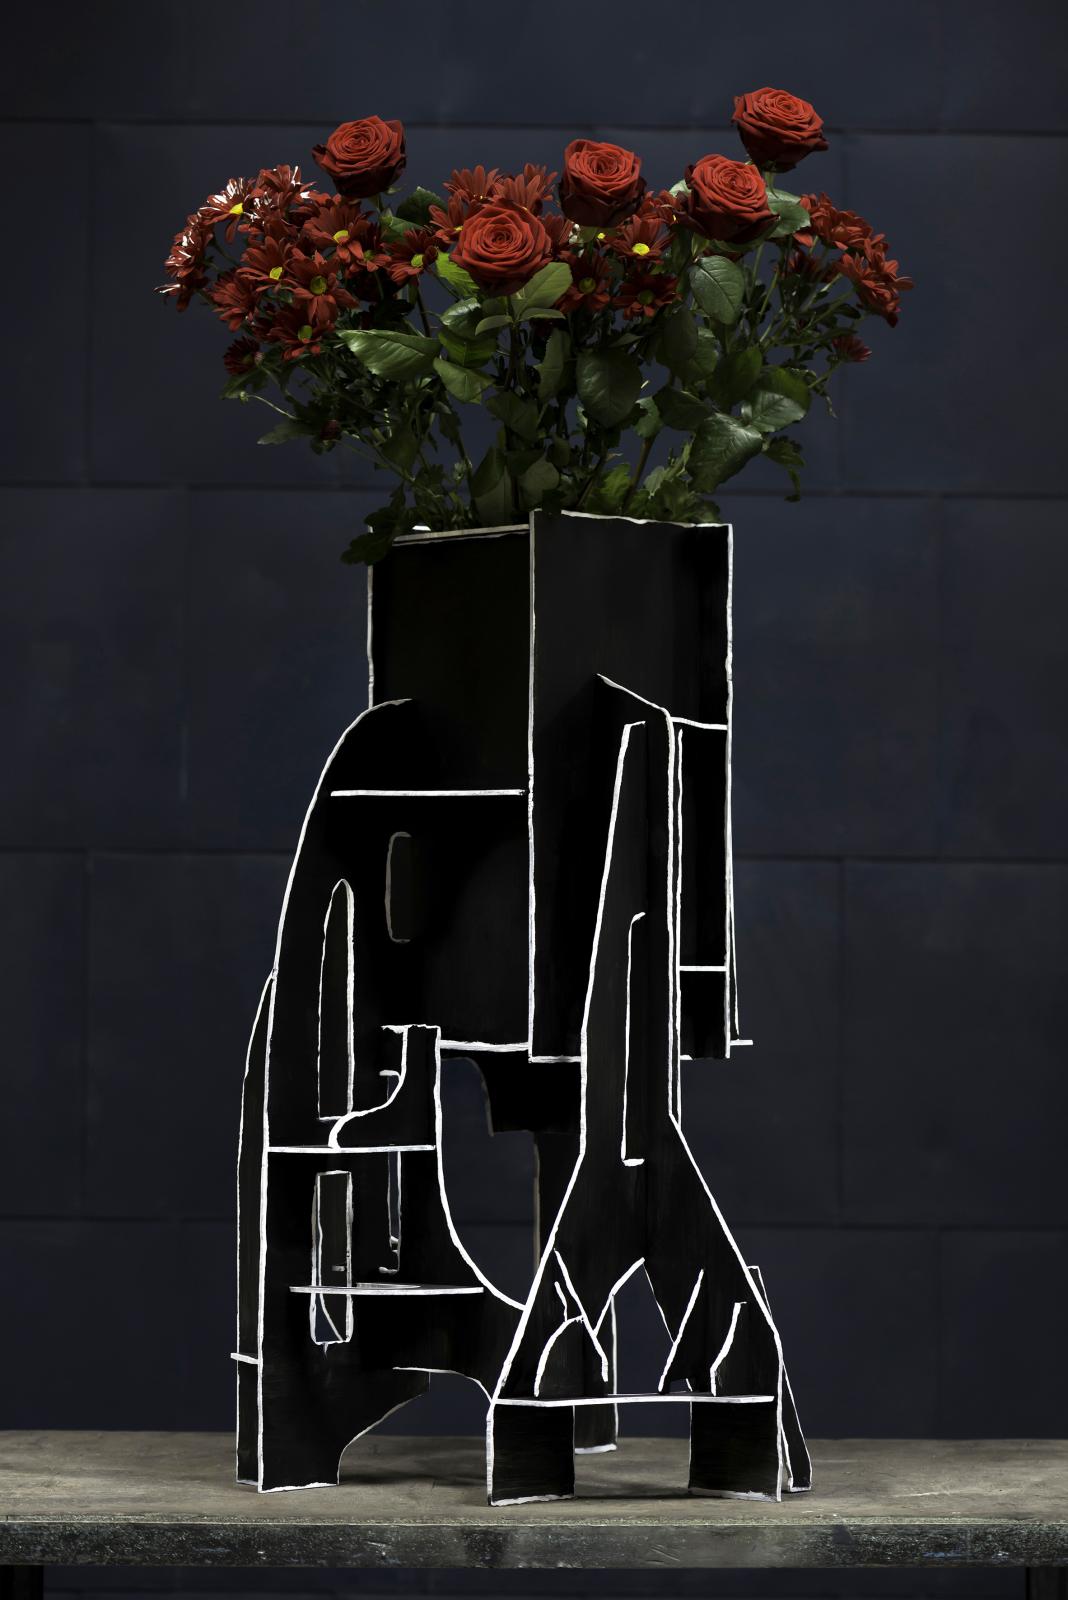 Joost van Bleiswijk (né en 1976), Protopunk, 2016, vase avec roses, acier, peinture, vernis, 51 x 44 x 84 cm, 2016.